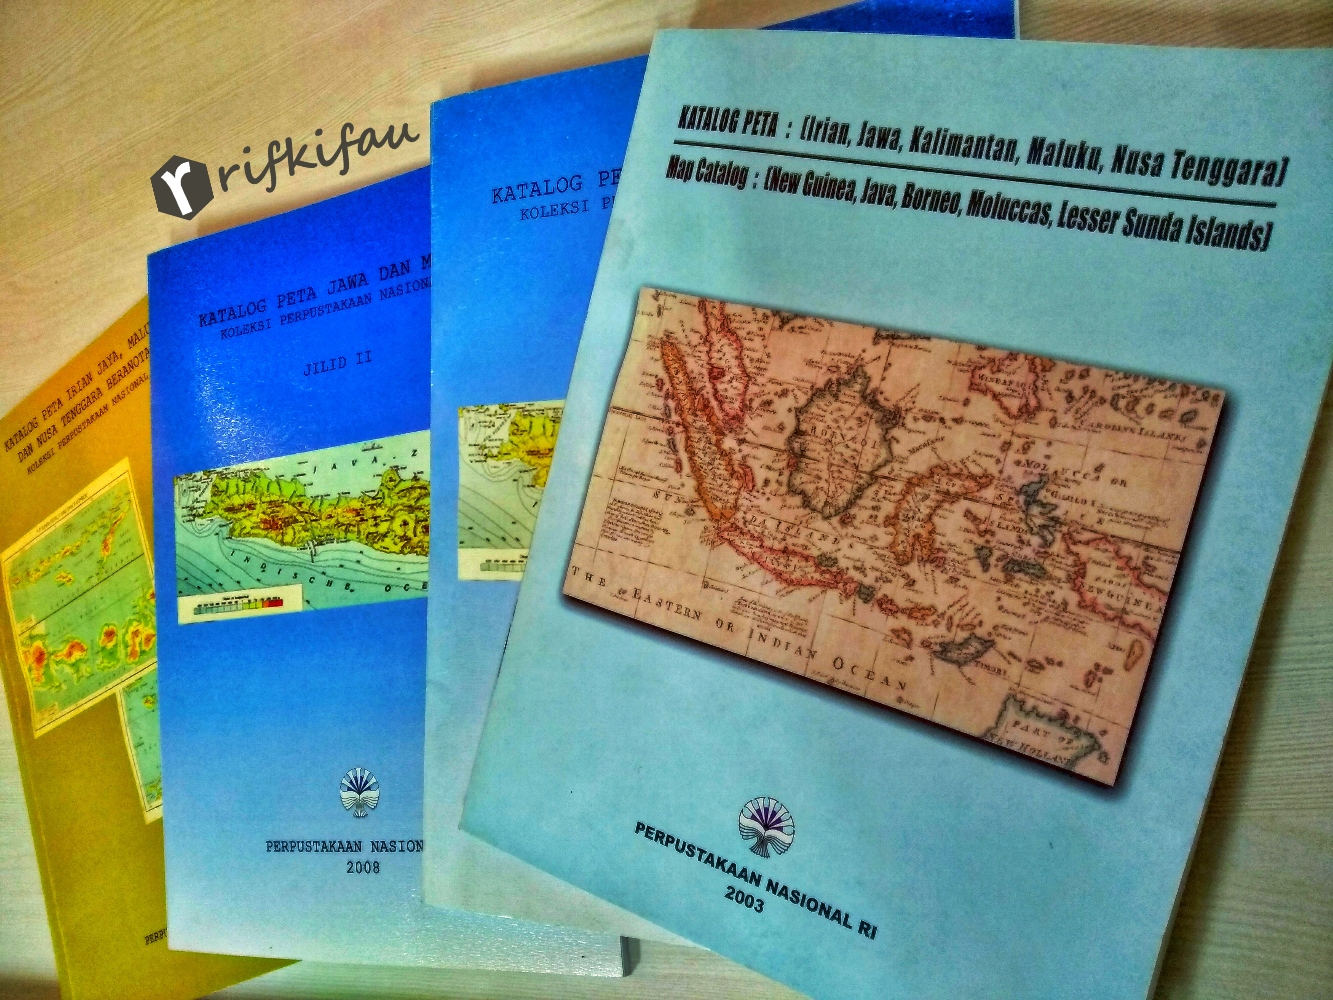 Perpustakaan-Nasional-Tertinggi-Indonesia-Buku-Katalog-Peta